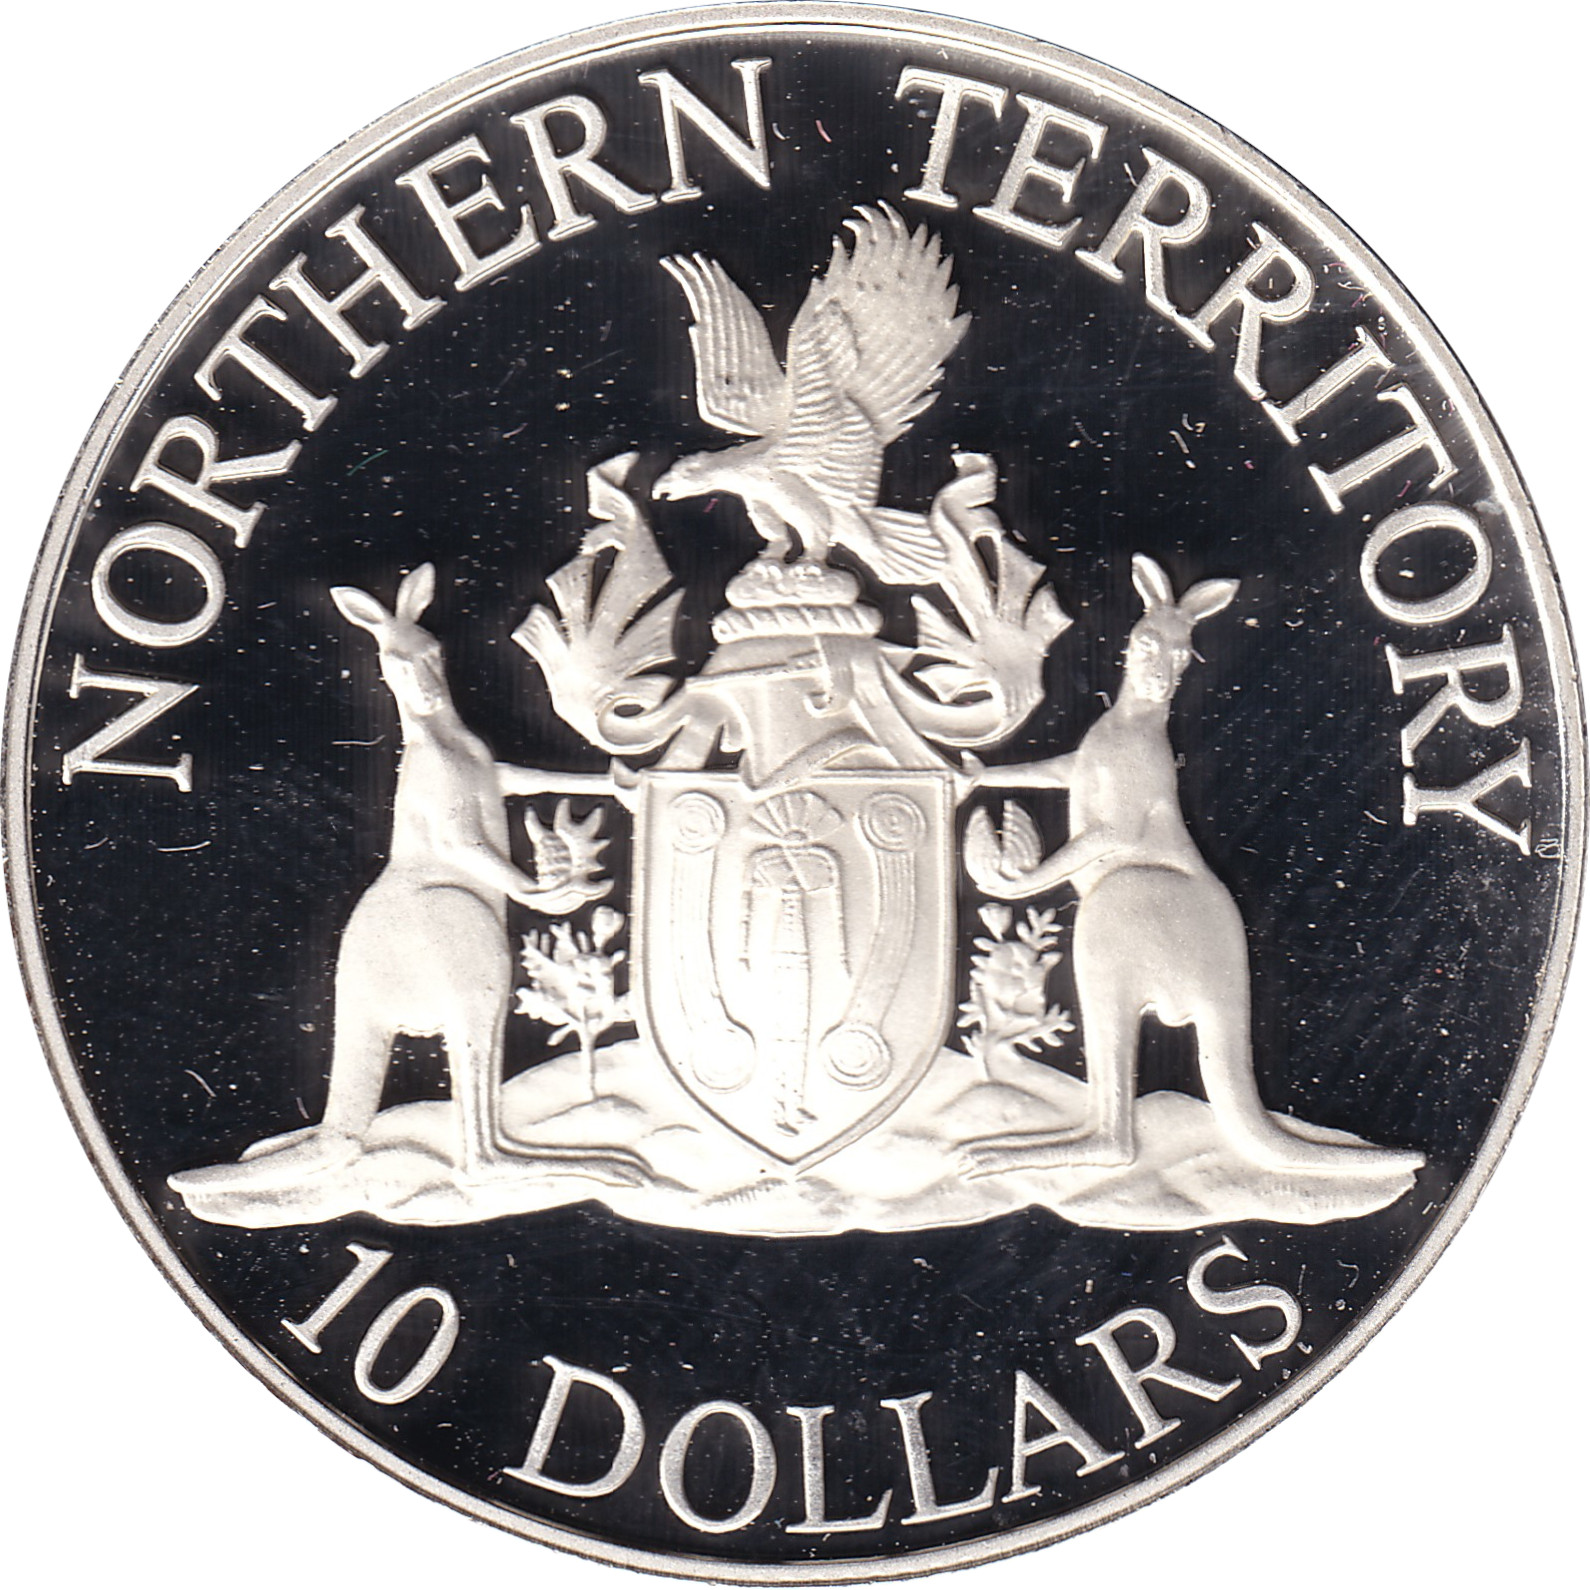 10 dollars - Northern Territory